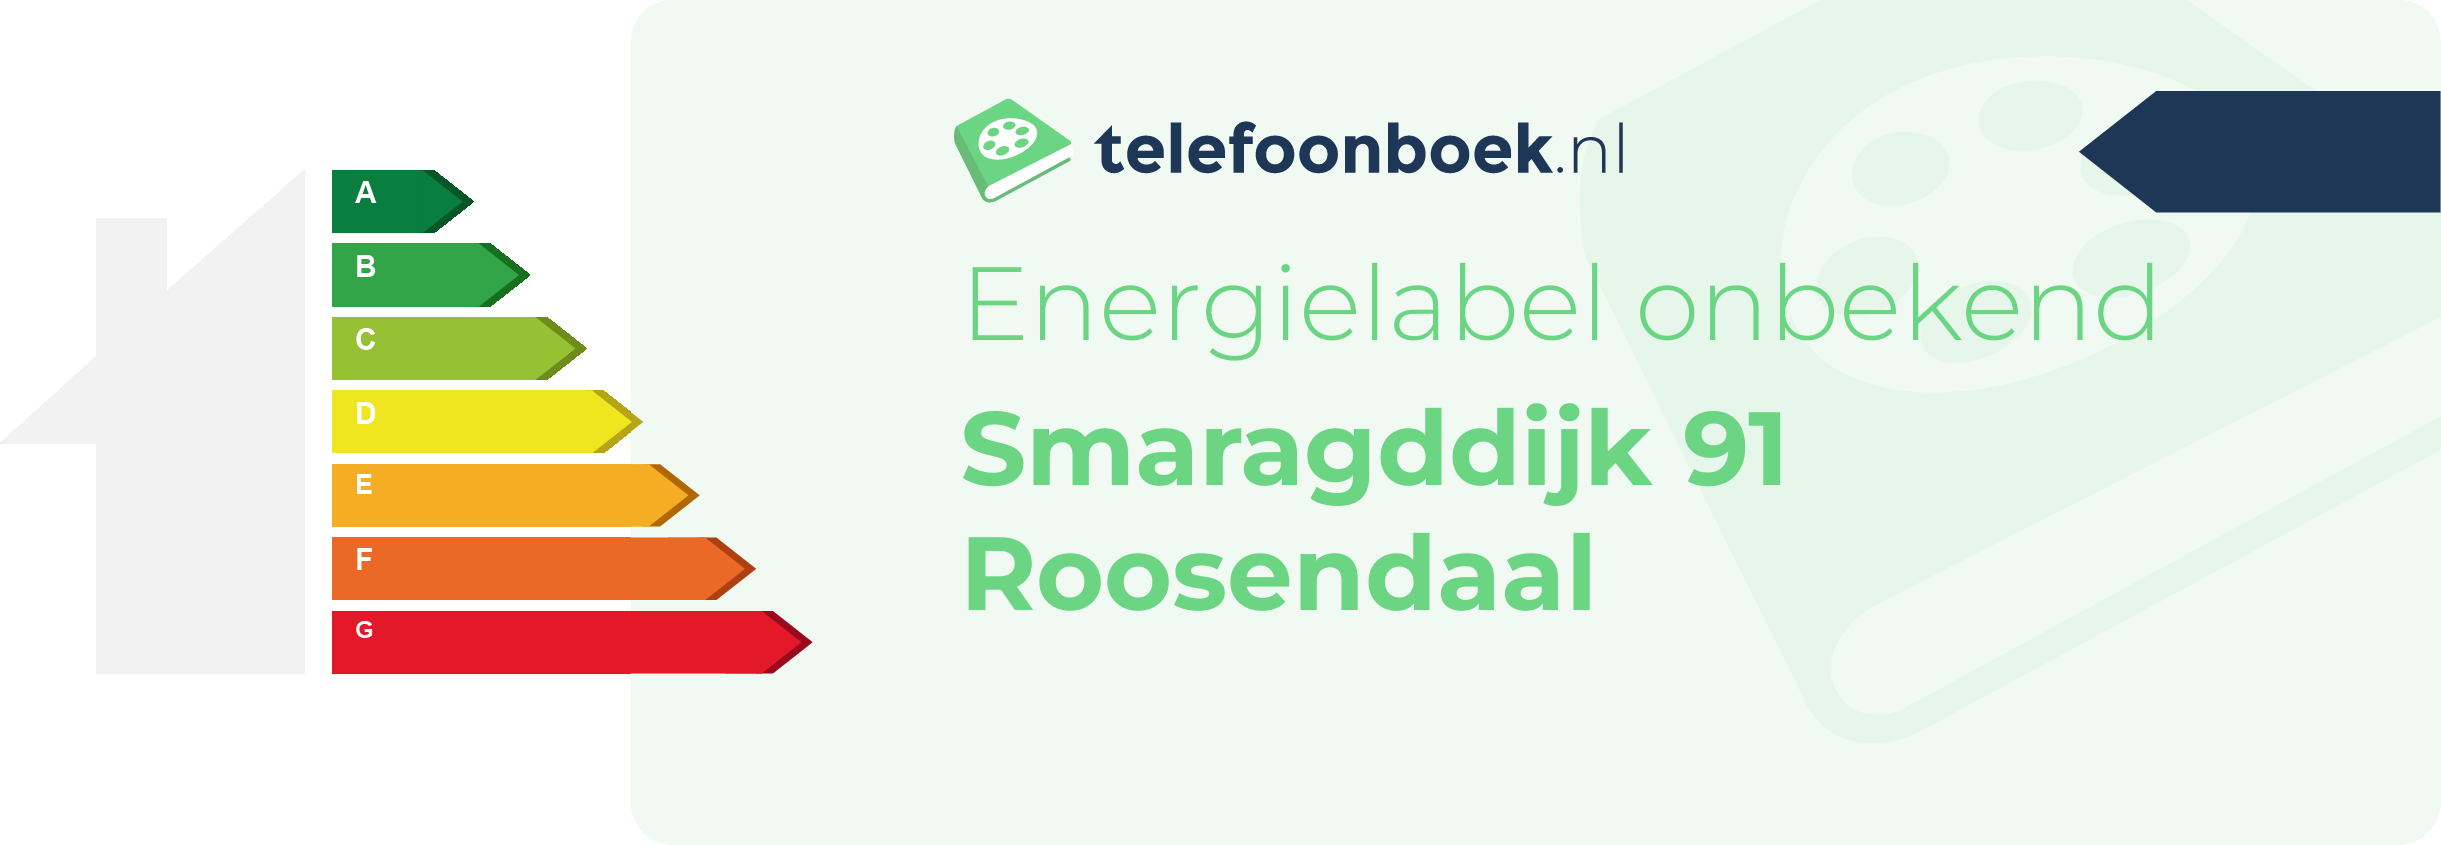 Energielabel Smaragddijk 91 Roosendaal